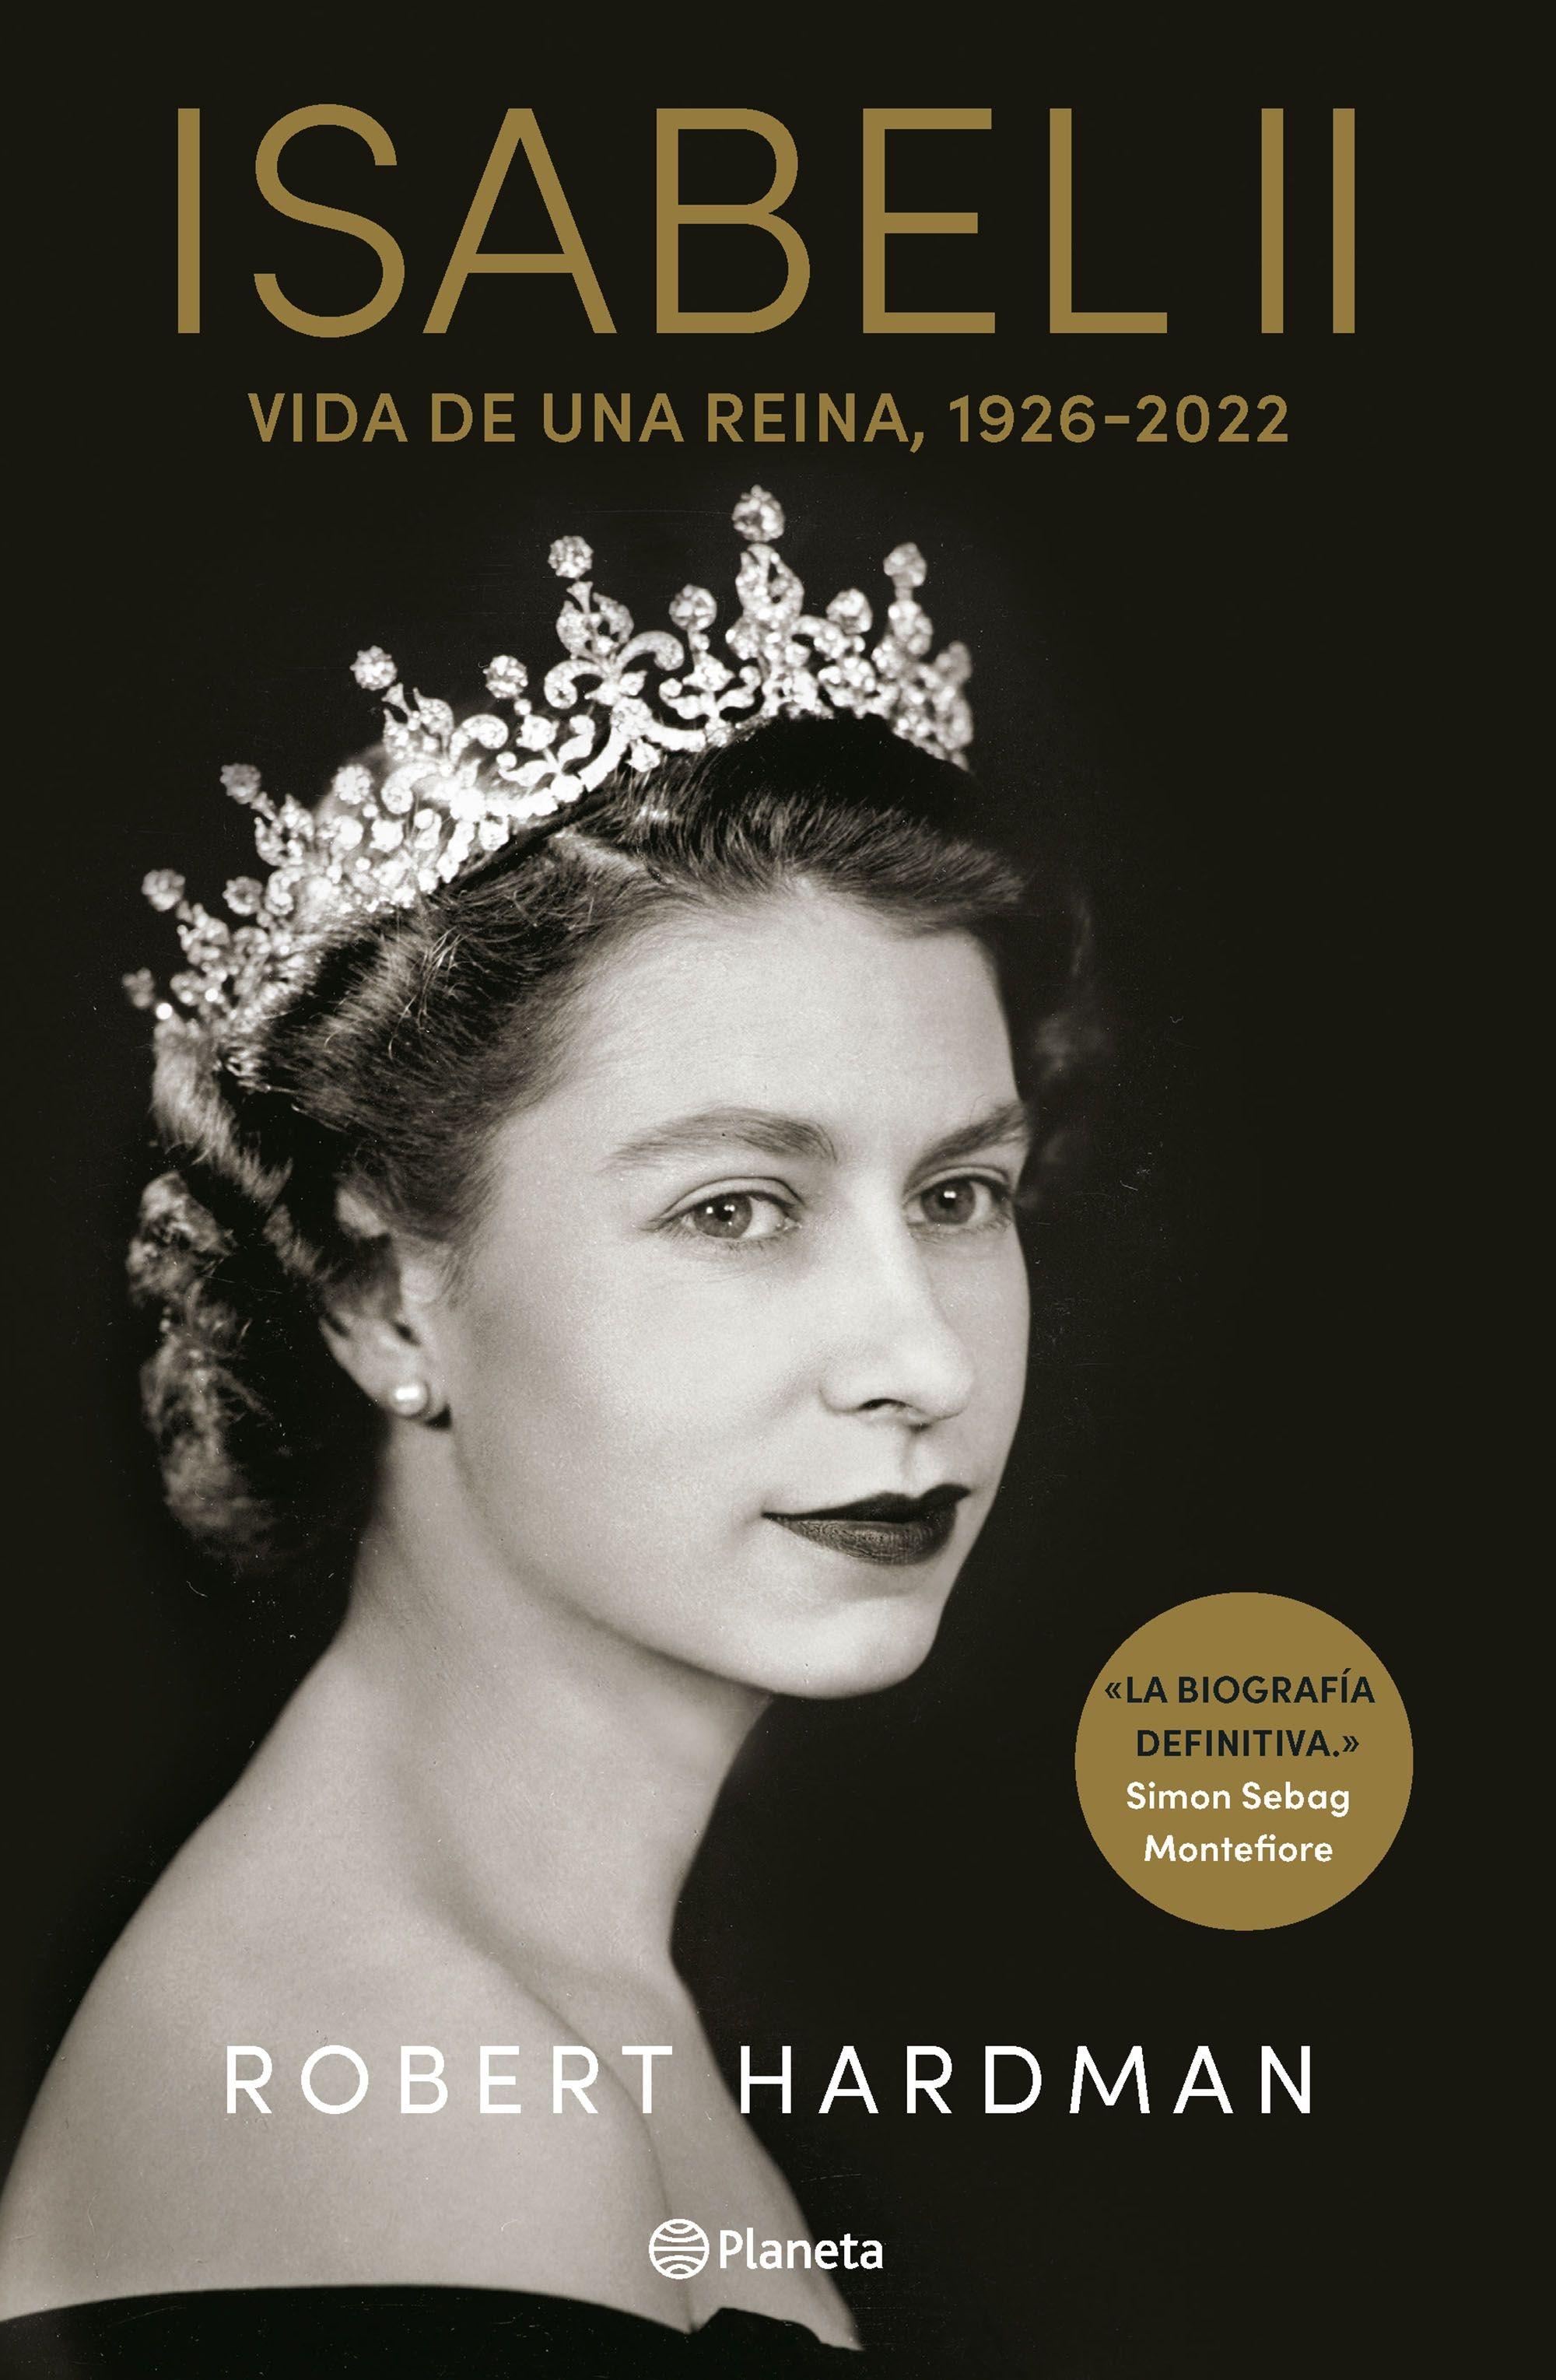 Isabel Ii "Vida de una Reina, 1926-2022". 